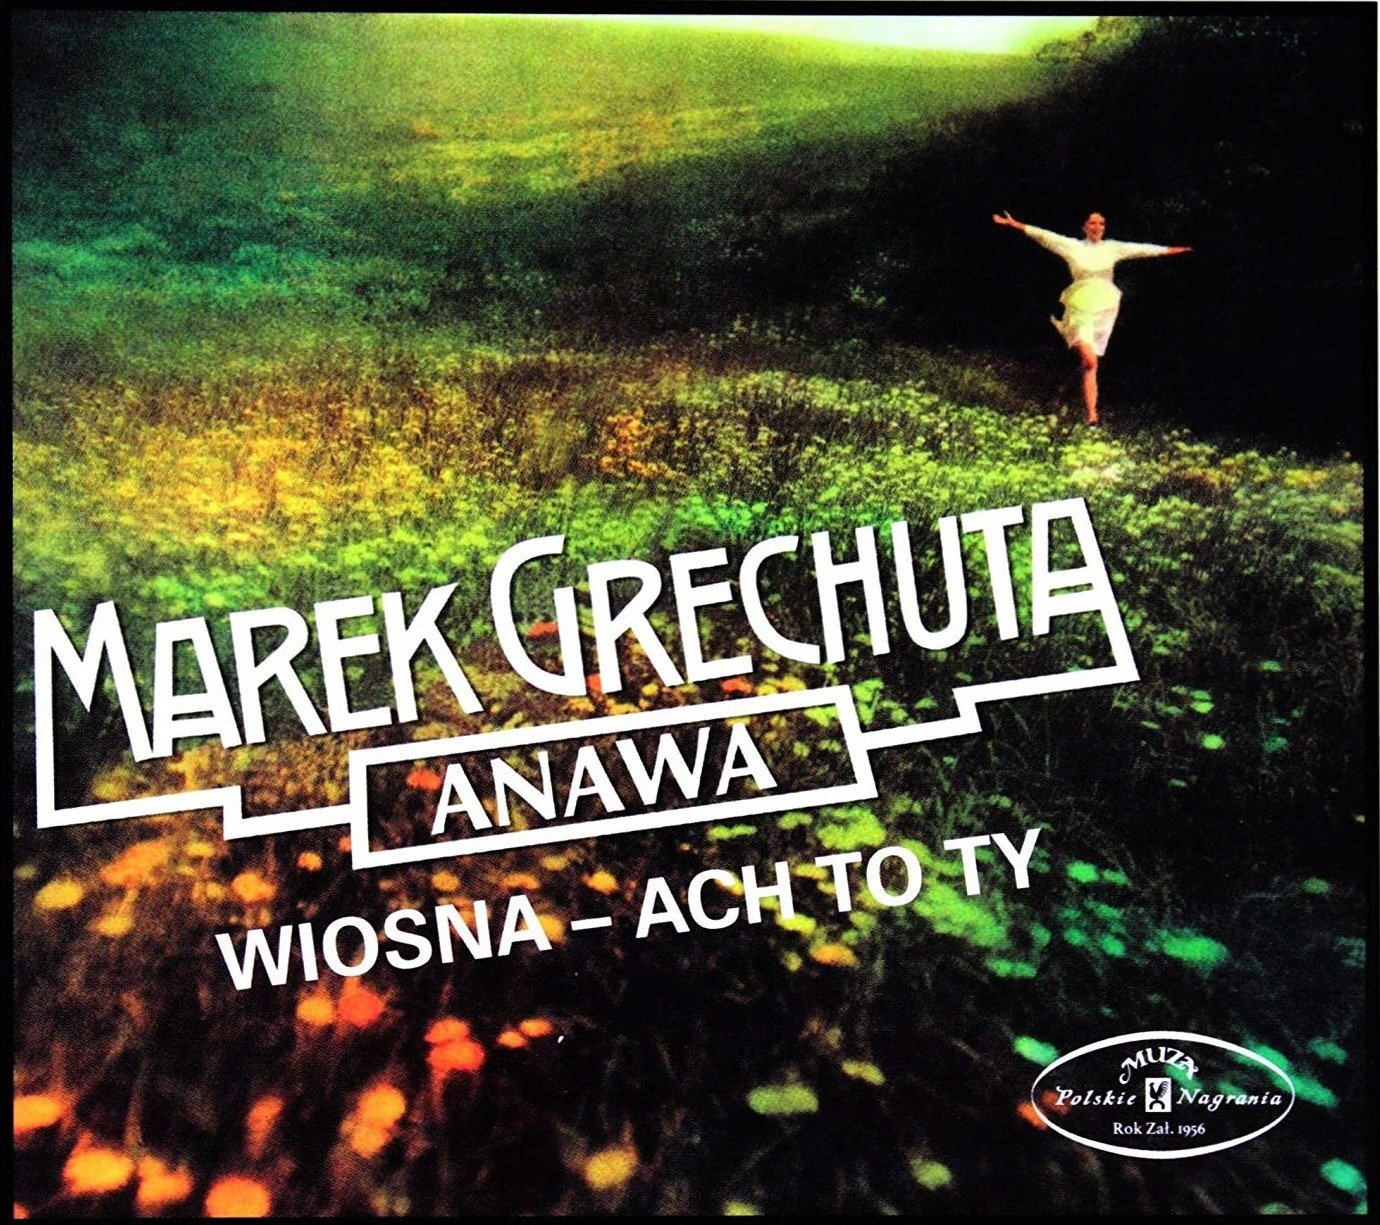 CD Shop - GRECHUTA, MAREK WIOSNA - ACH TO TY (DIGIPACK)